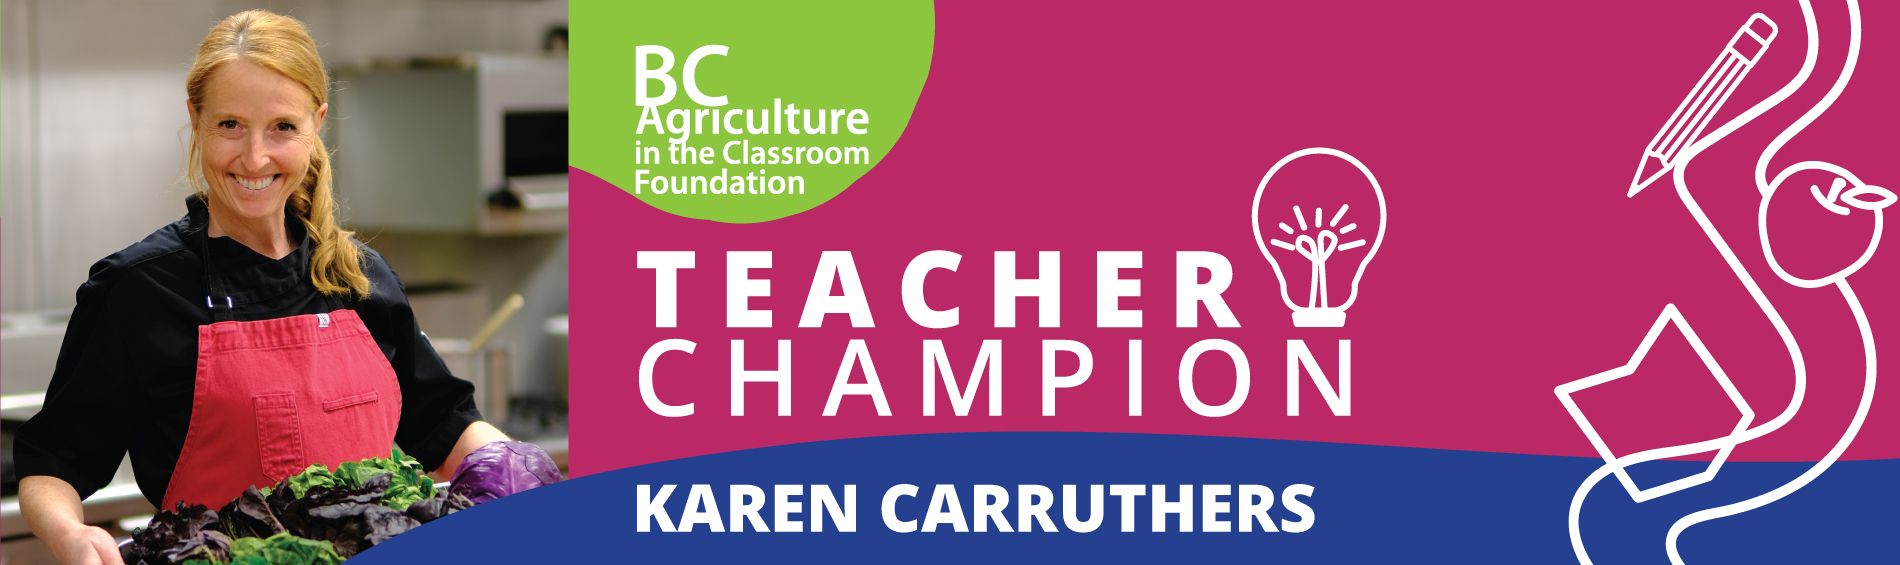 Karen Carruthers - Teacher Champion